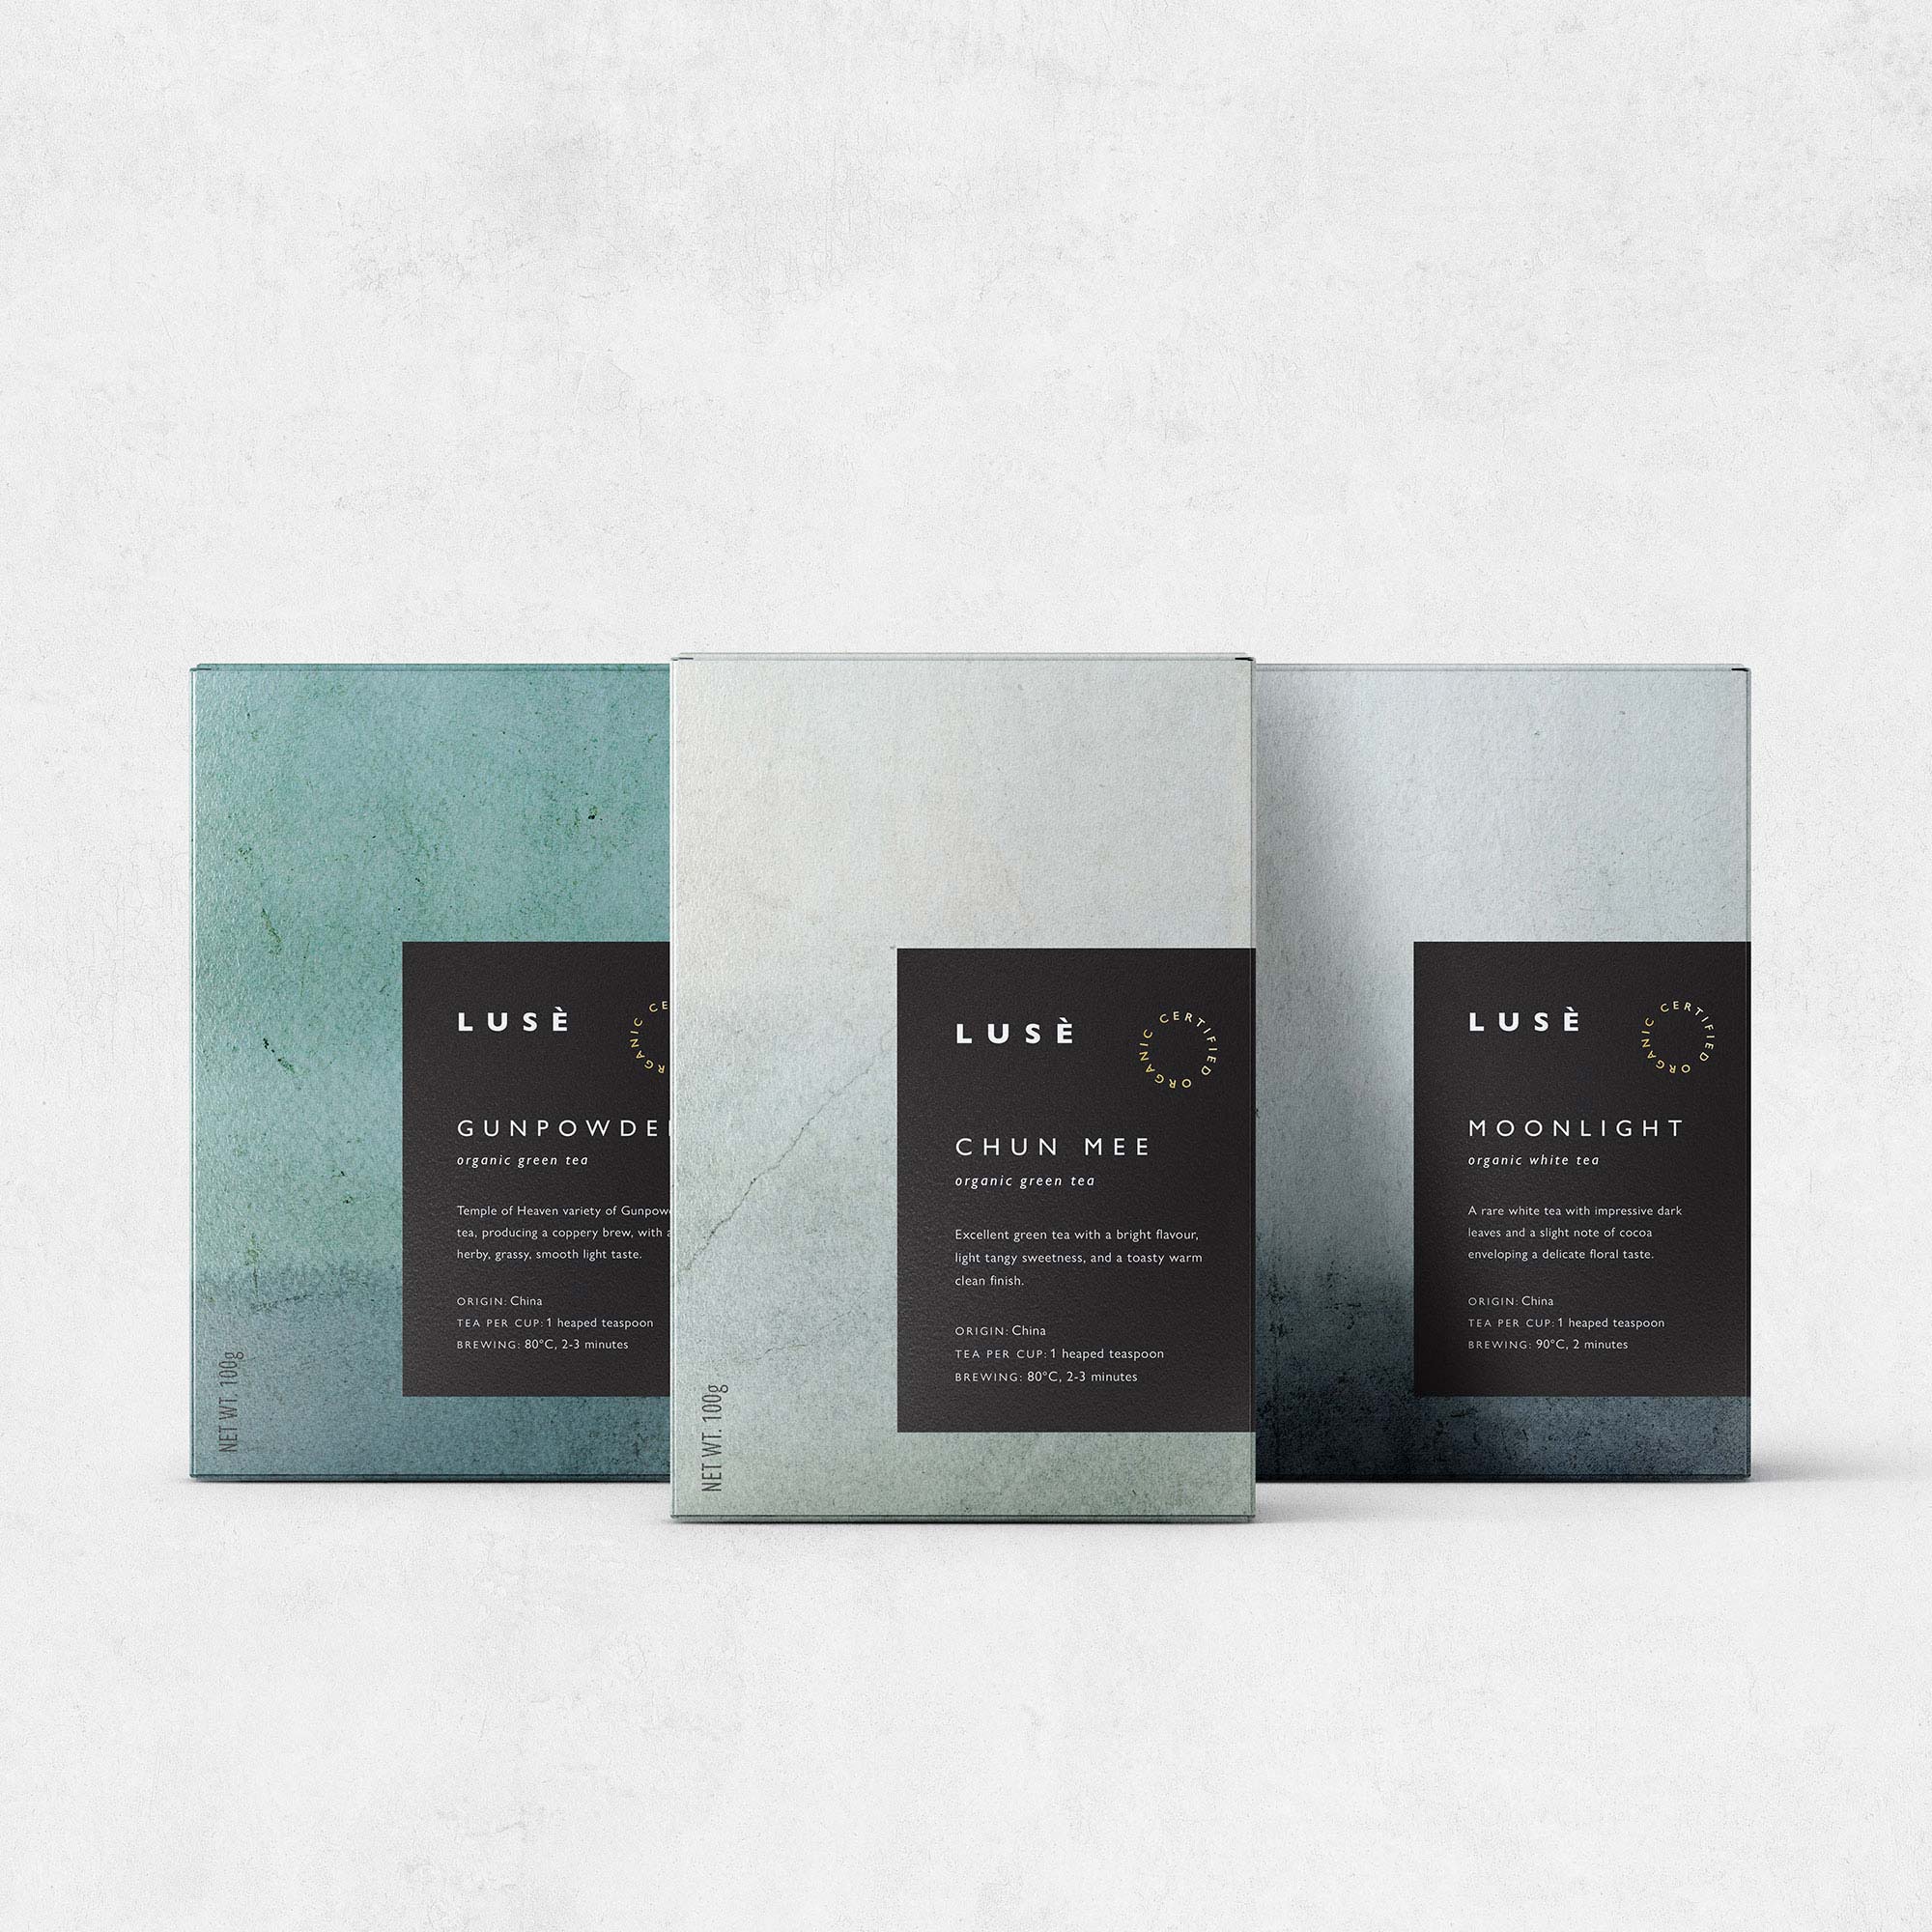 Karolina Król Studio abstract art inspired minimalist brand and packaging designs for organic tea